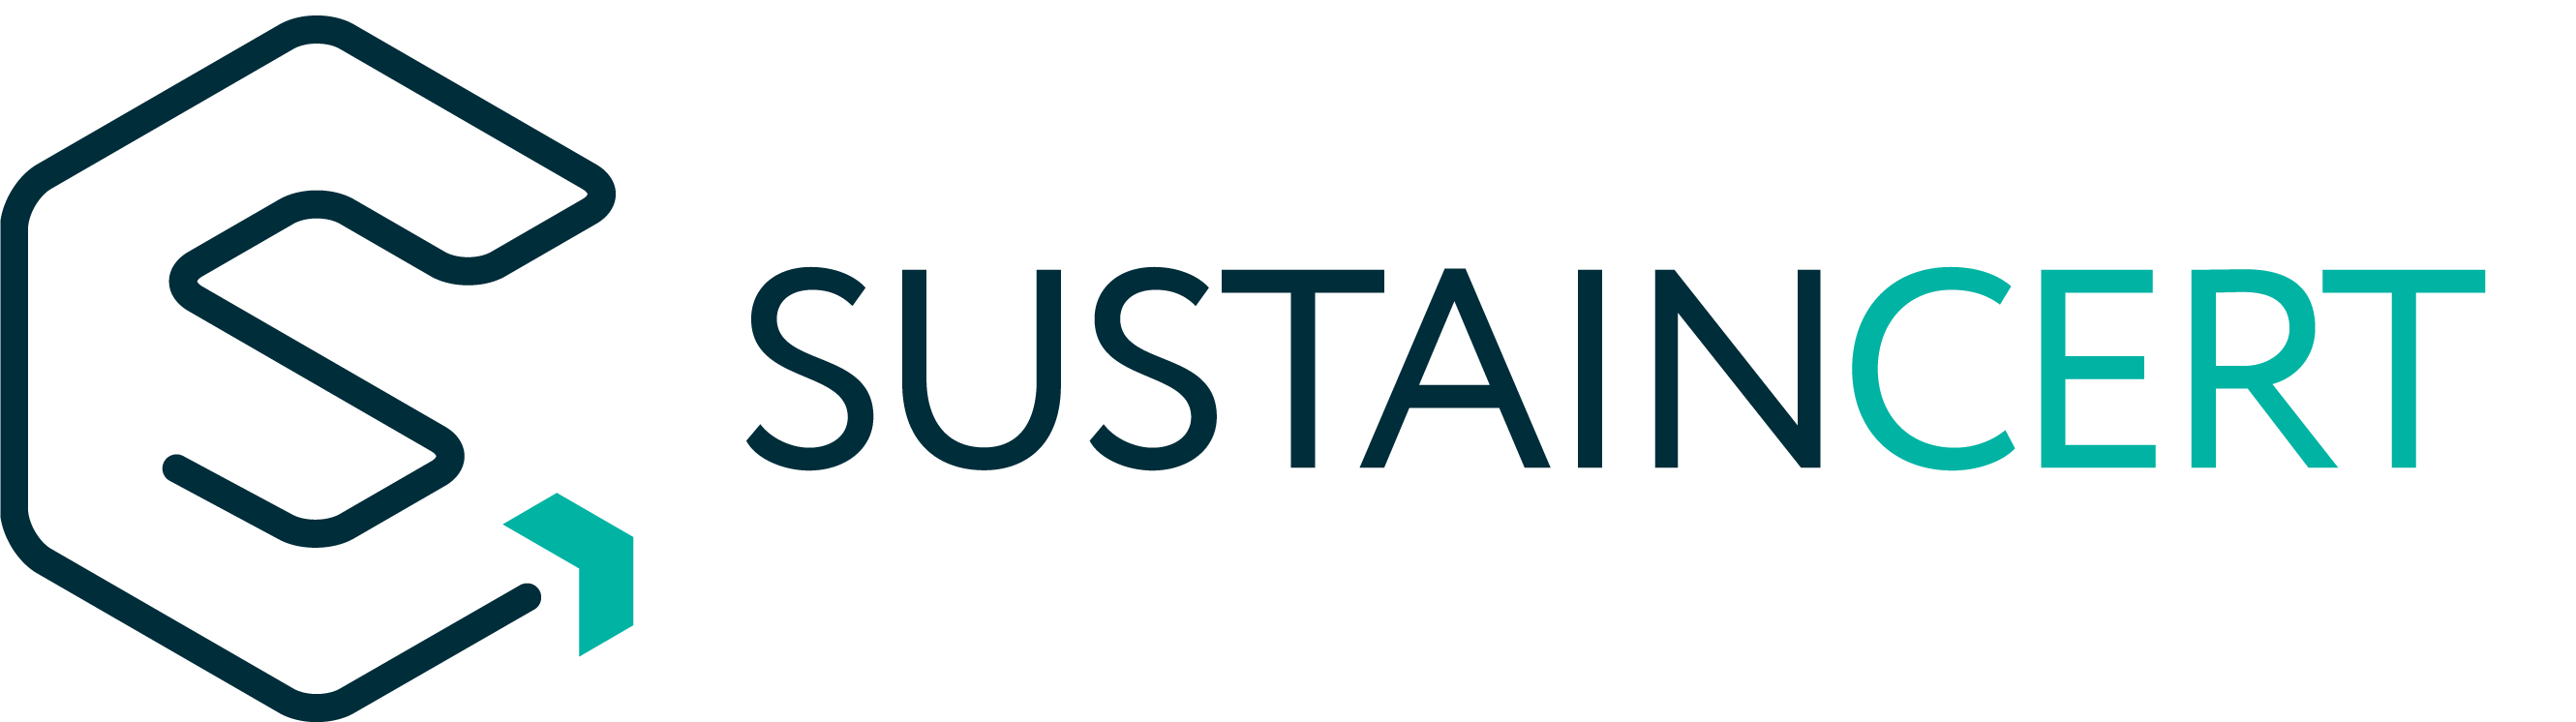 SustainCERT Logo